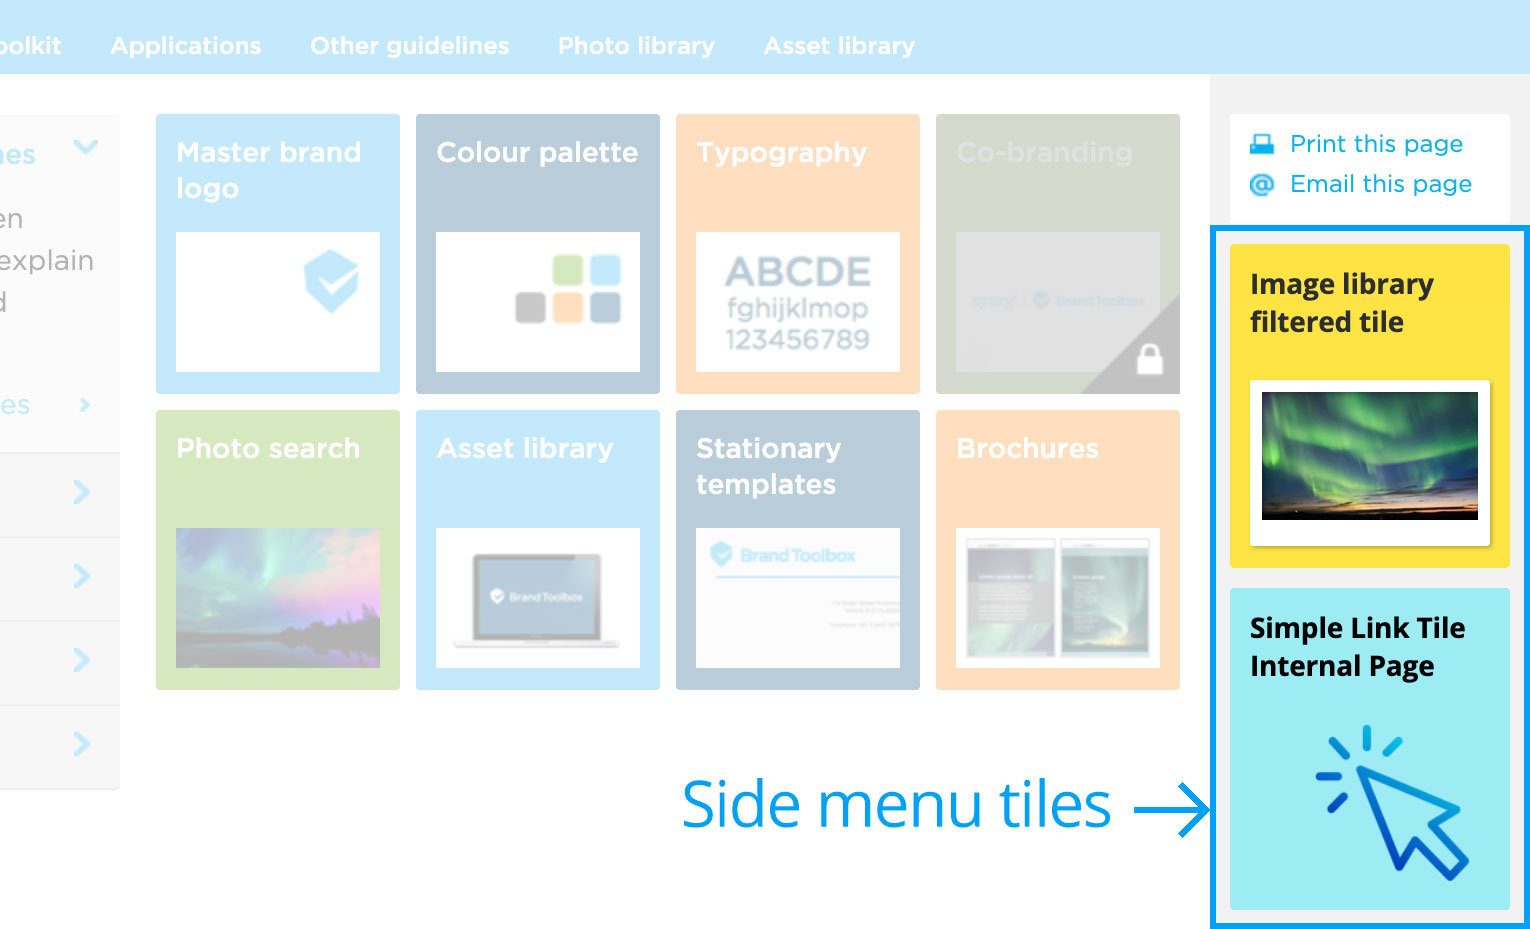 Side menu tiles user interface position